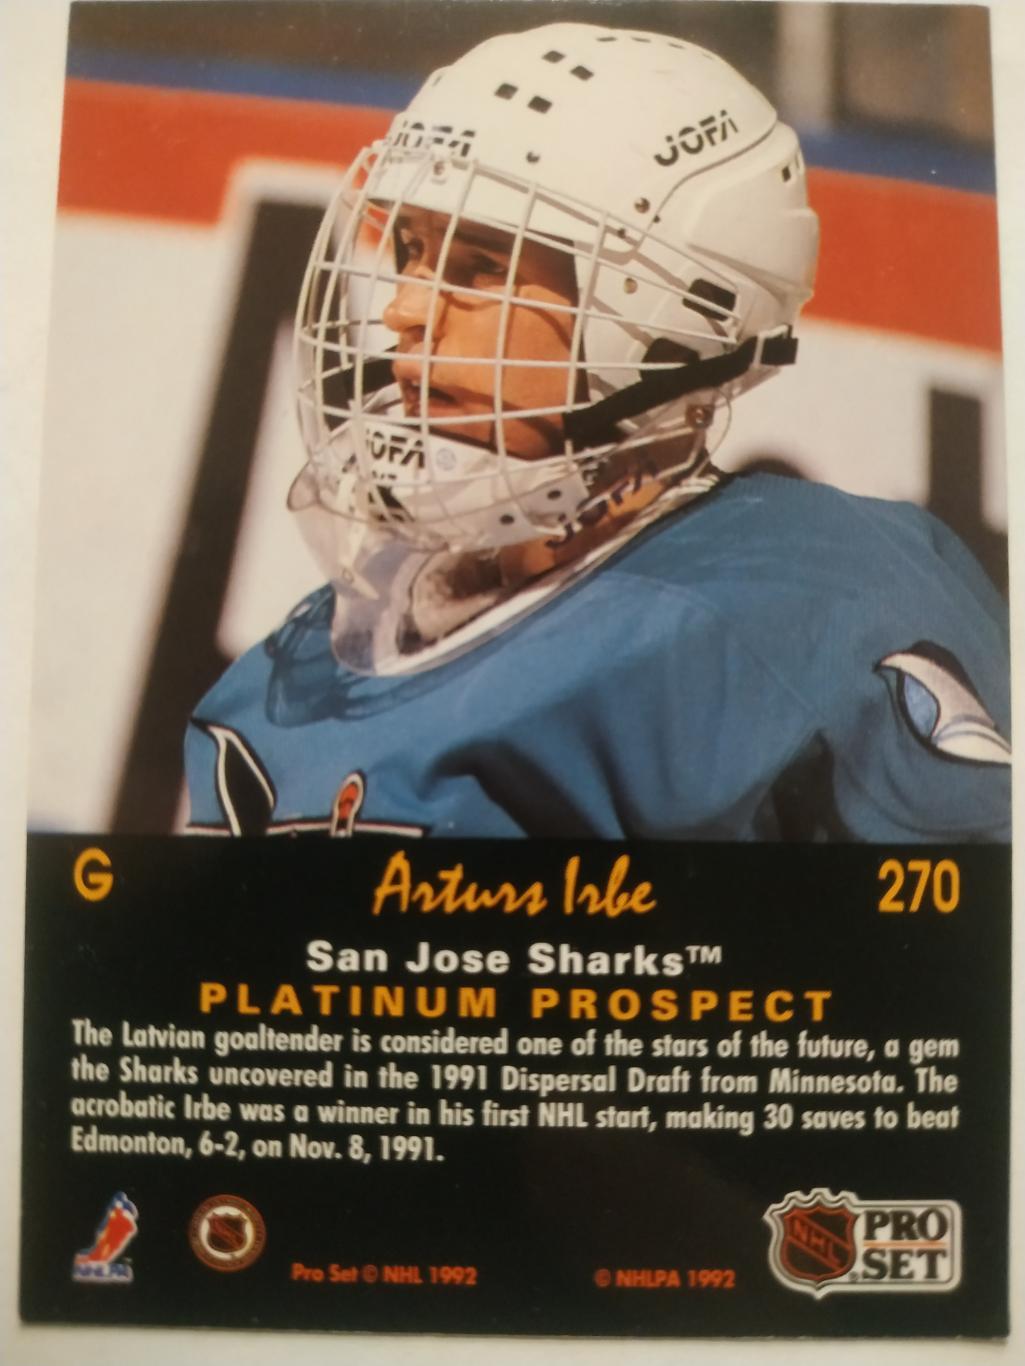 ХОККЕЙ КАРТОЧКА НХЛ PRO SET PLATINUM 1992 NHL ARTURS IRBE SAN JOSE SHARKS #270 1